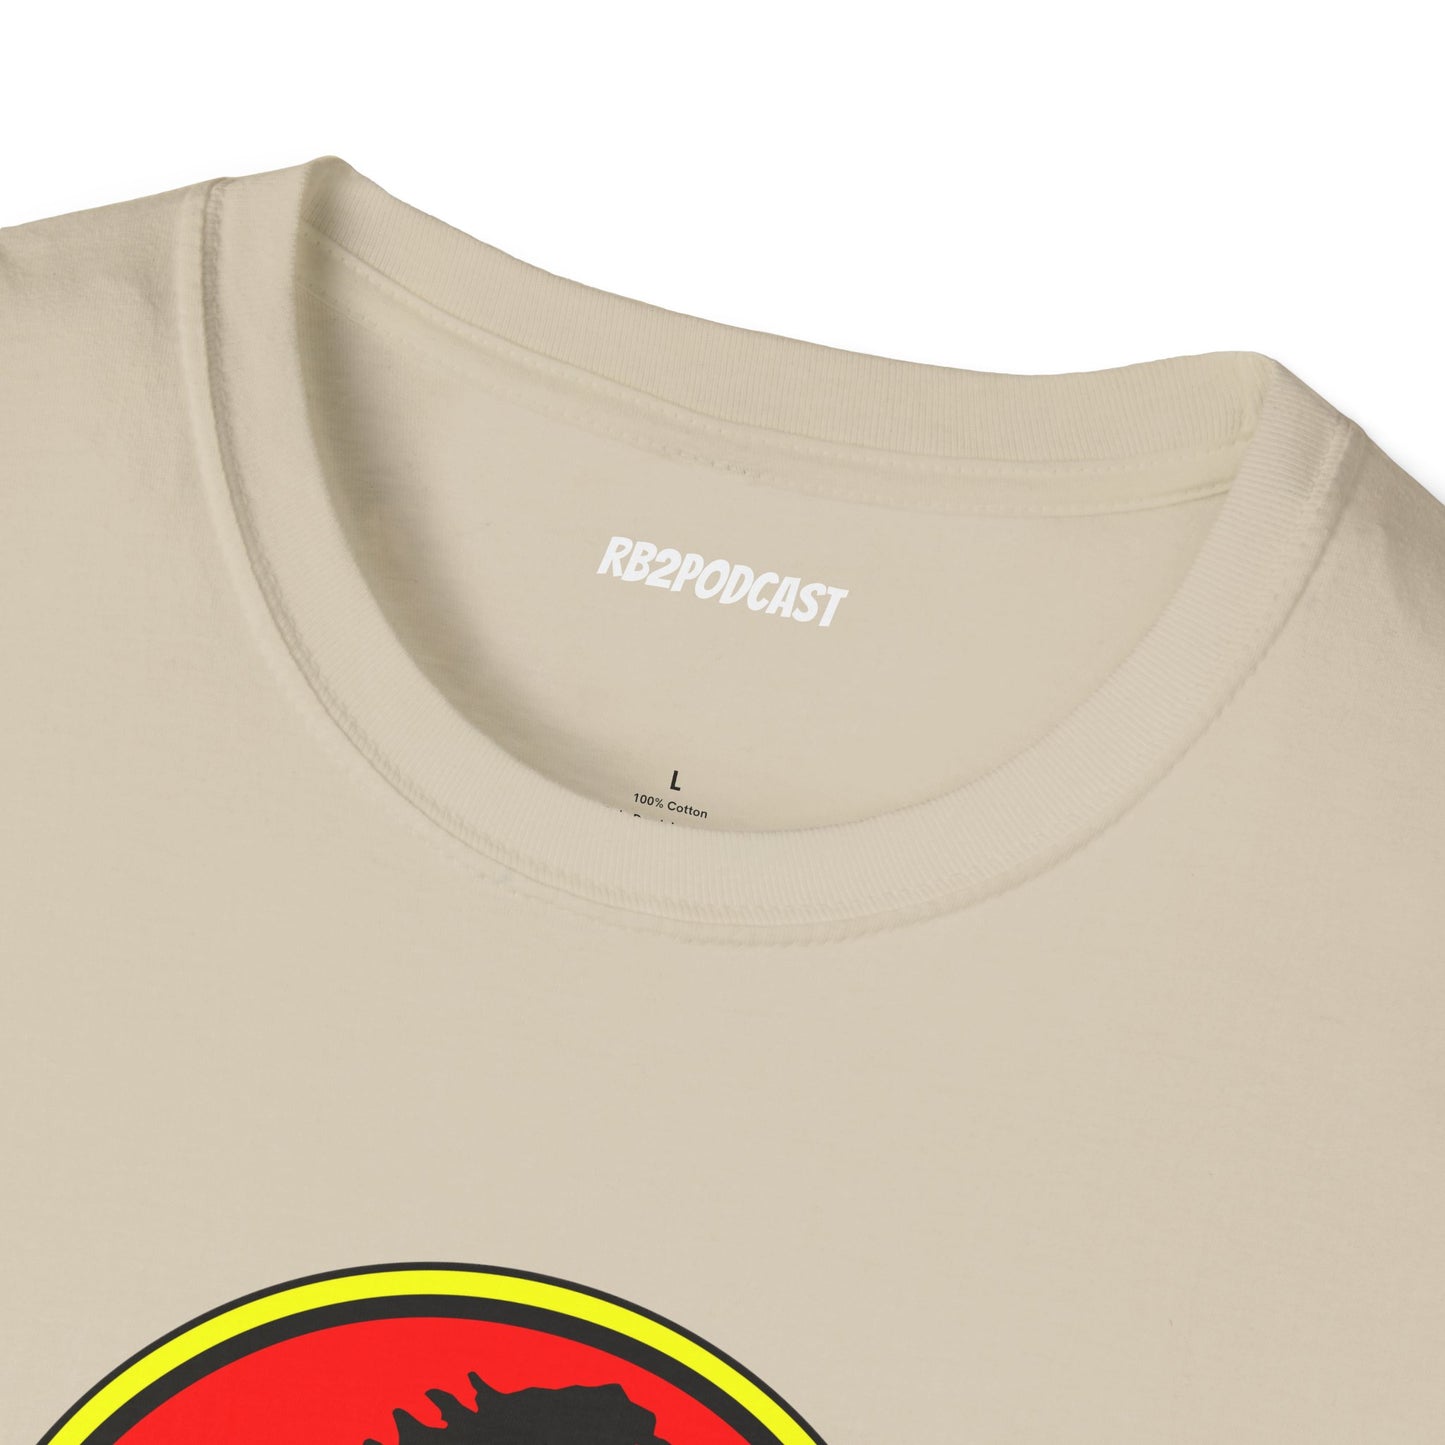 RB2podcast Jurassic T-Shirt